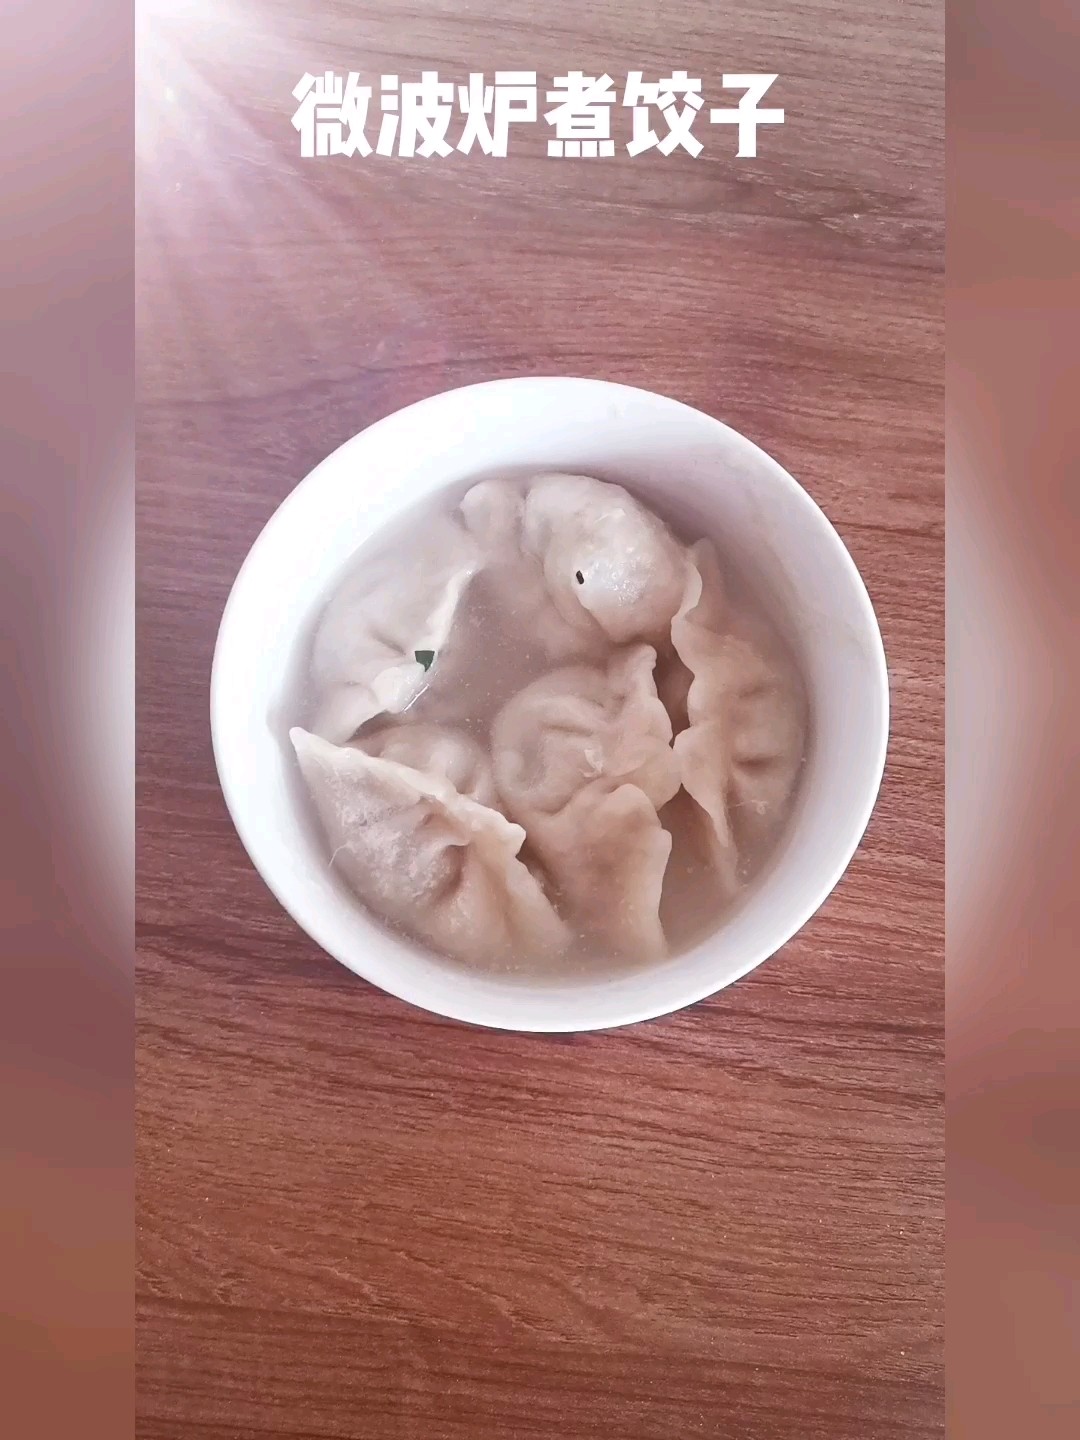 Dumplings Cooked in The Microwave